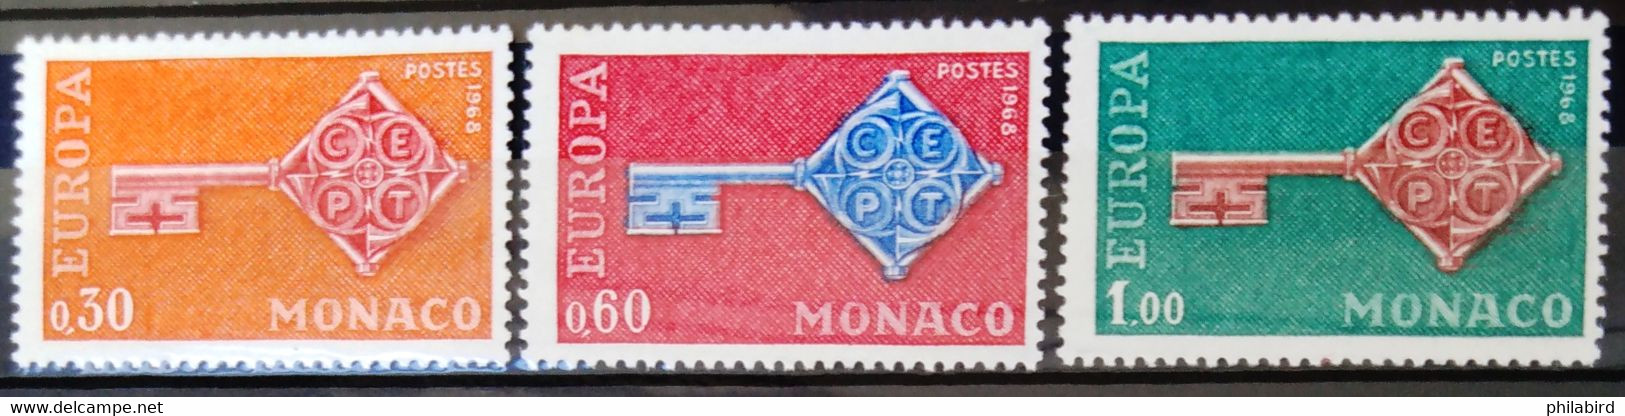 EUROPA 1968 - MONACO                  N° 749/751                       NEUF** - 1968